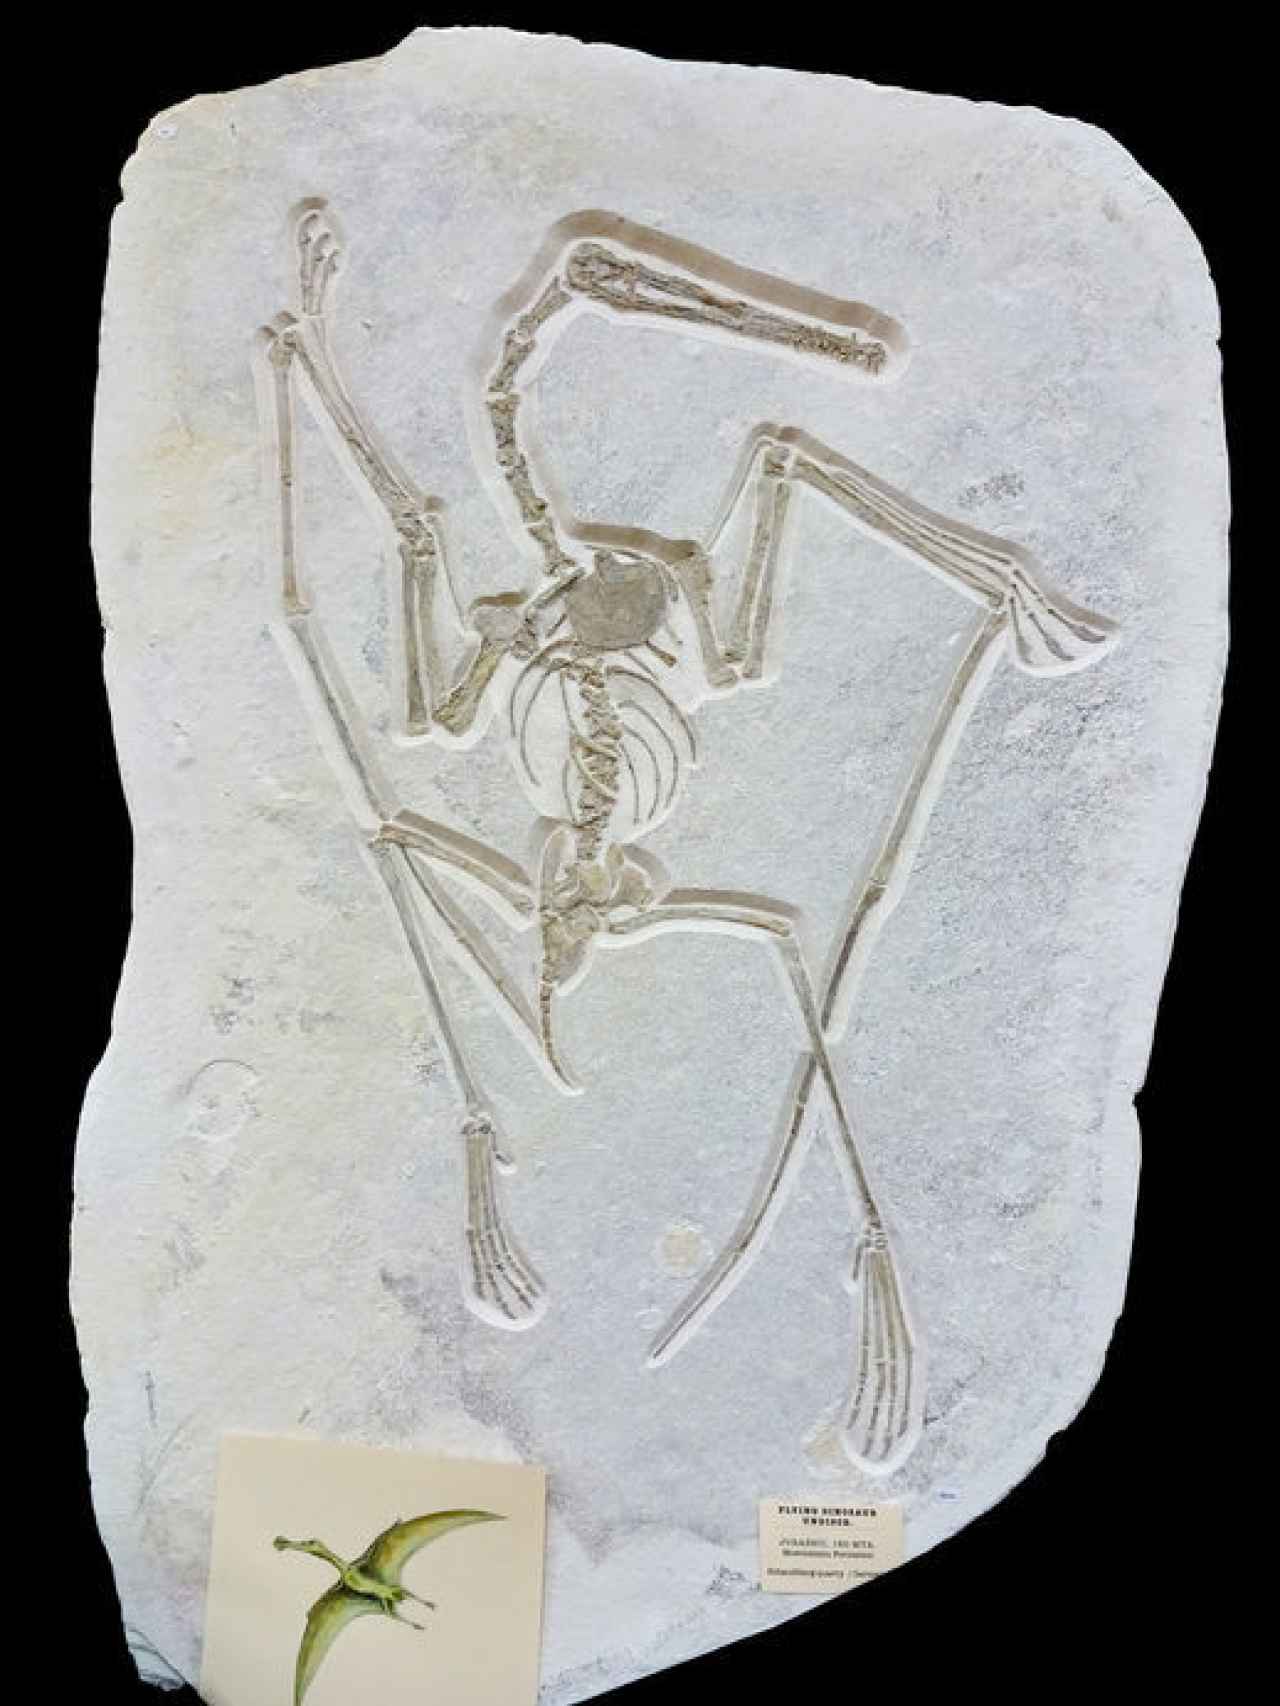 El pterosaurio retirado de la subasta.